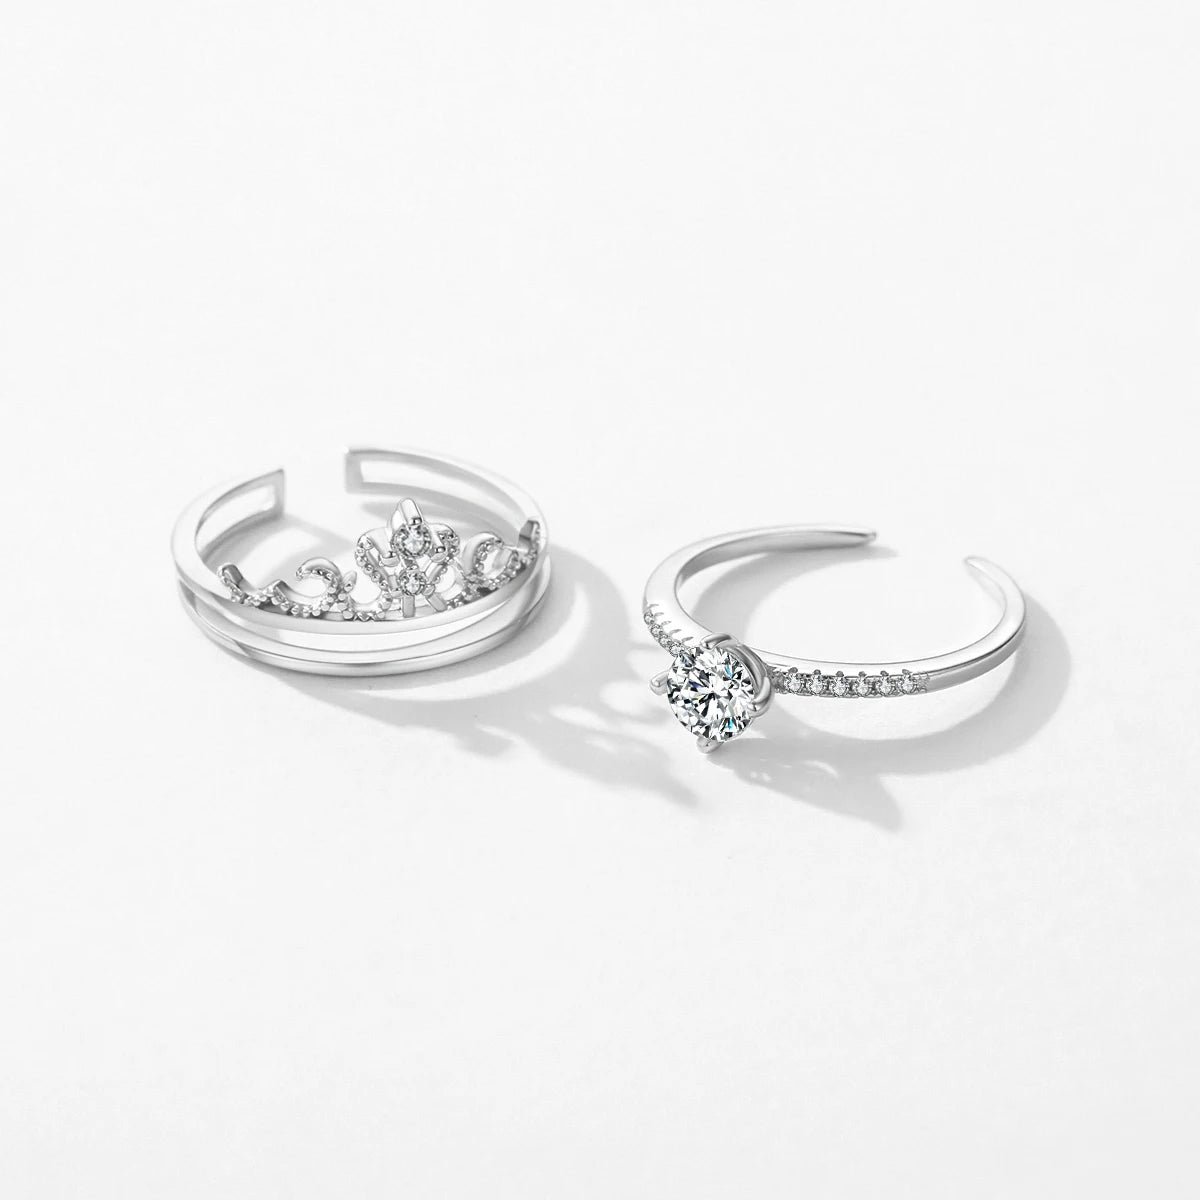 MQ Timar S925 Silver princess Adjustable Ring